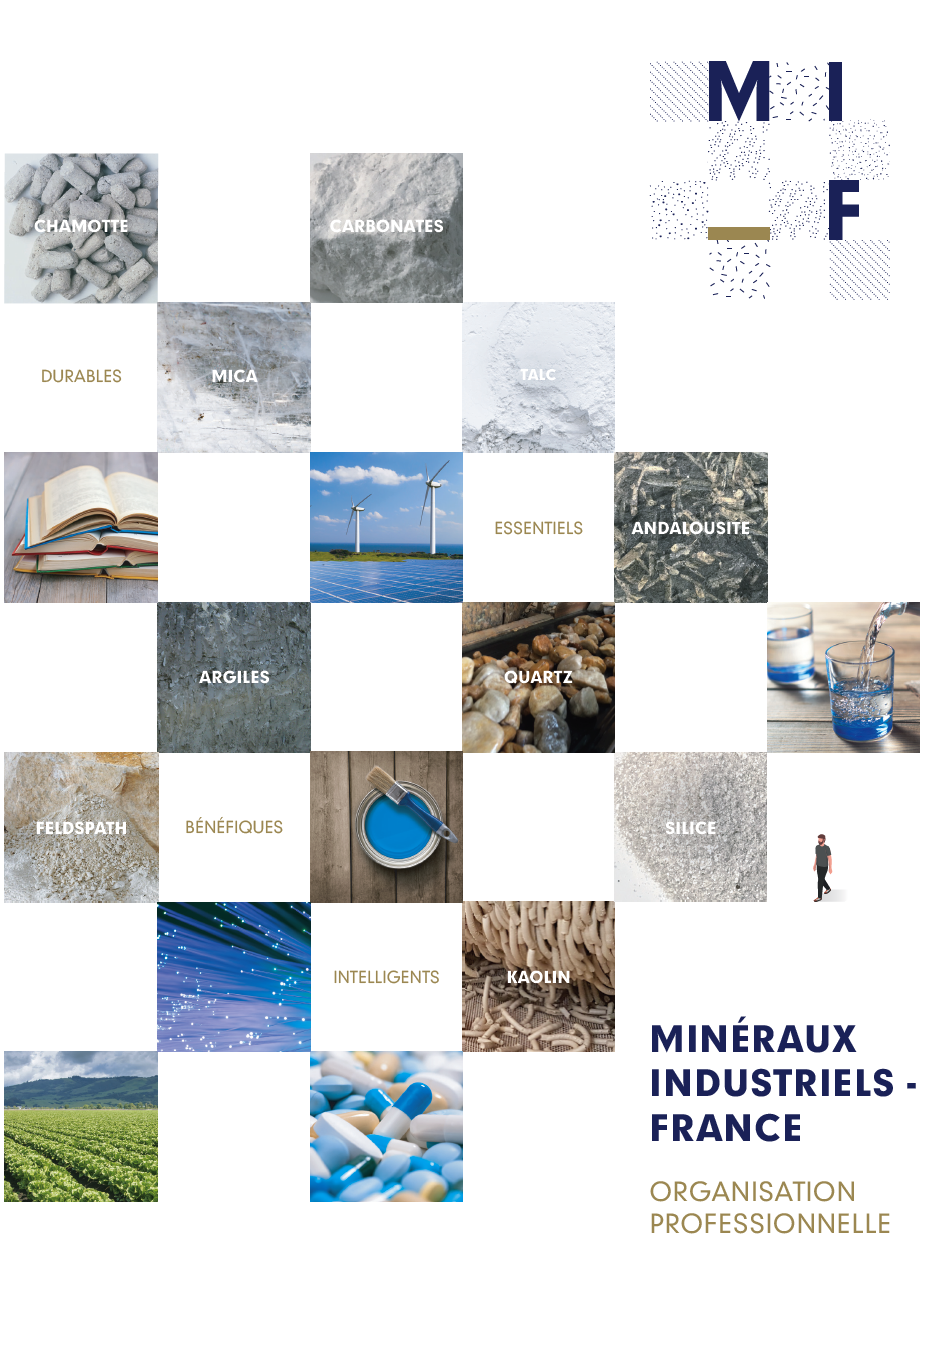 MI-F - Les minéraux industriels en France